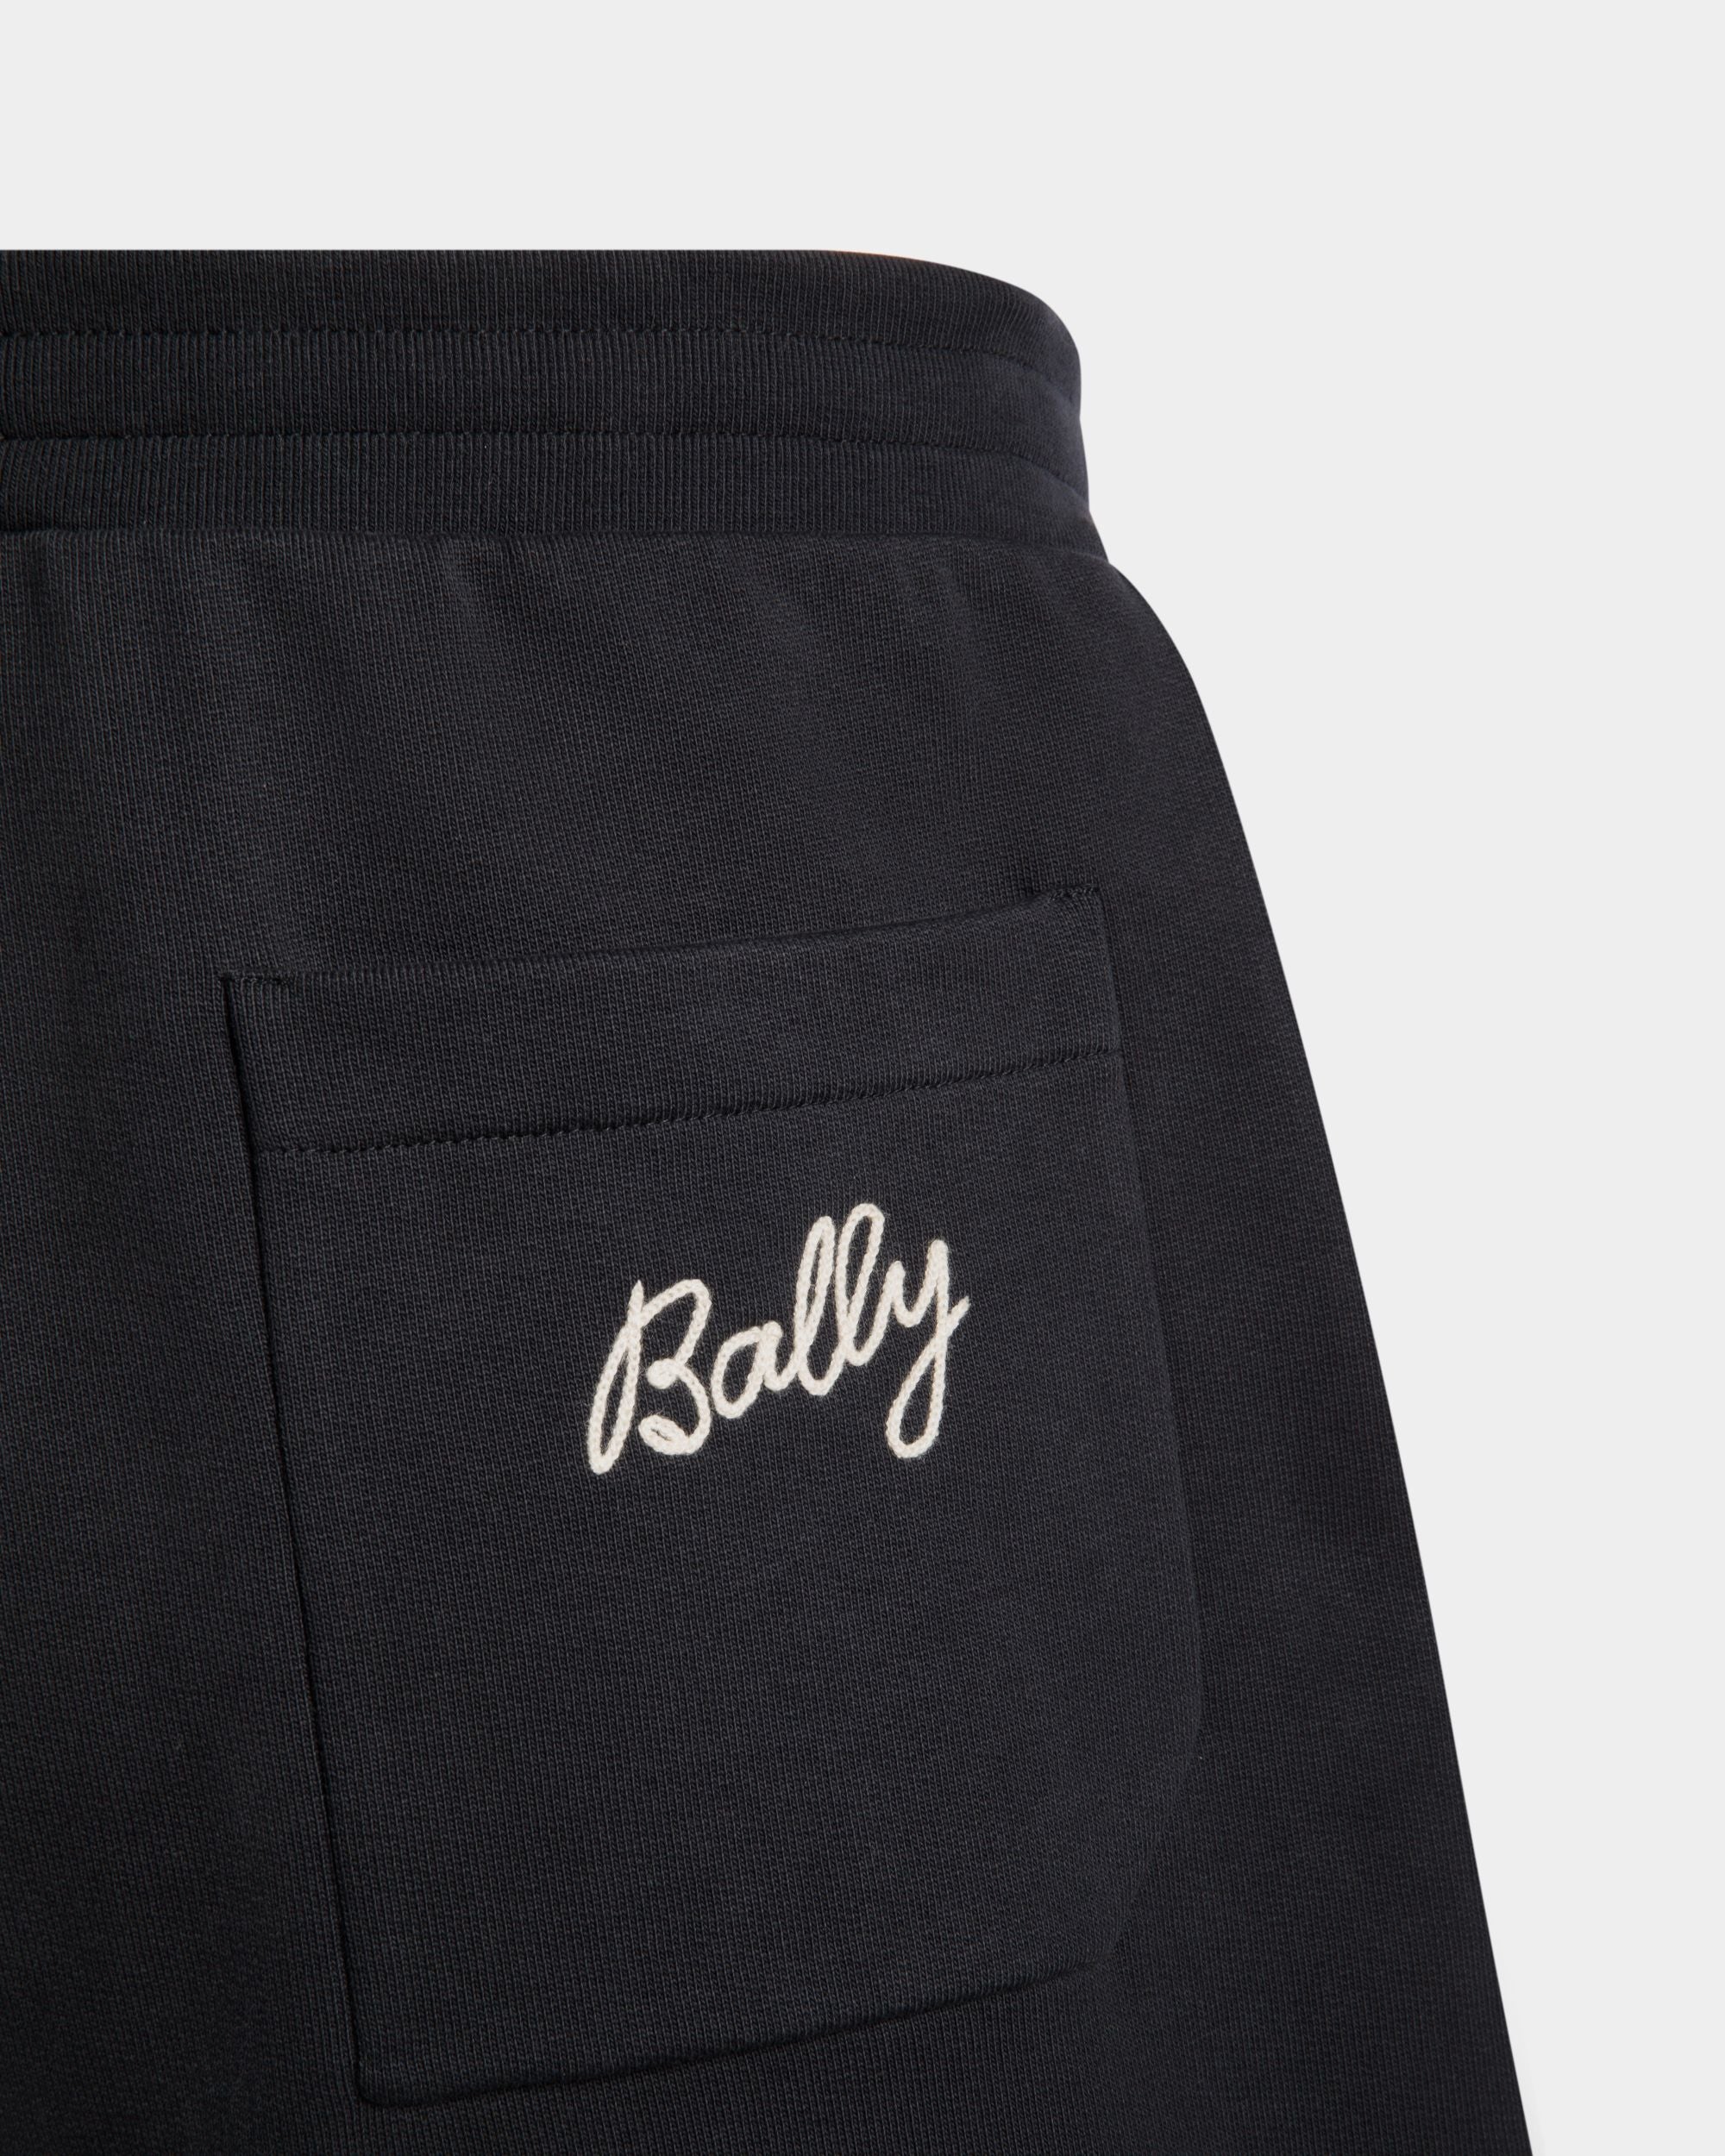 Men's Sweat shorts in Navy Blue Cotton | Bally | On Model Detail